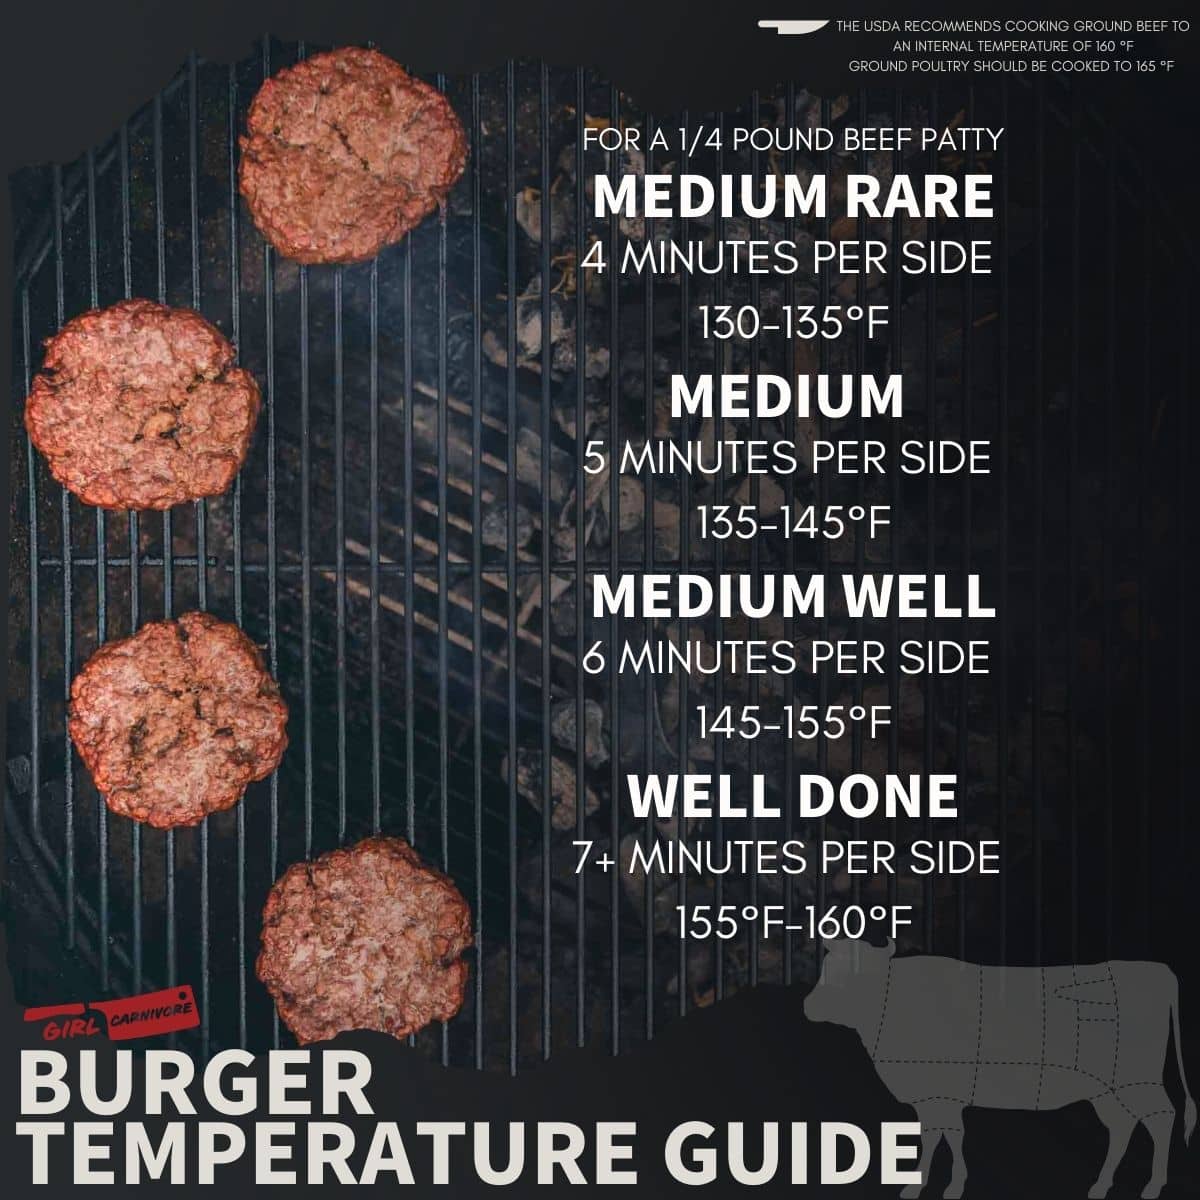 Temperature doneness guide for hamburgers.